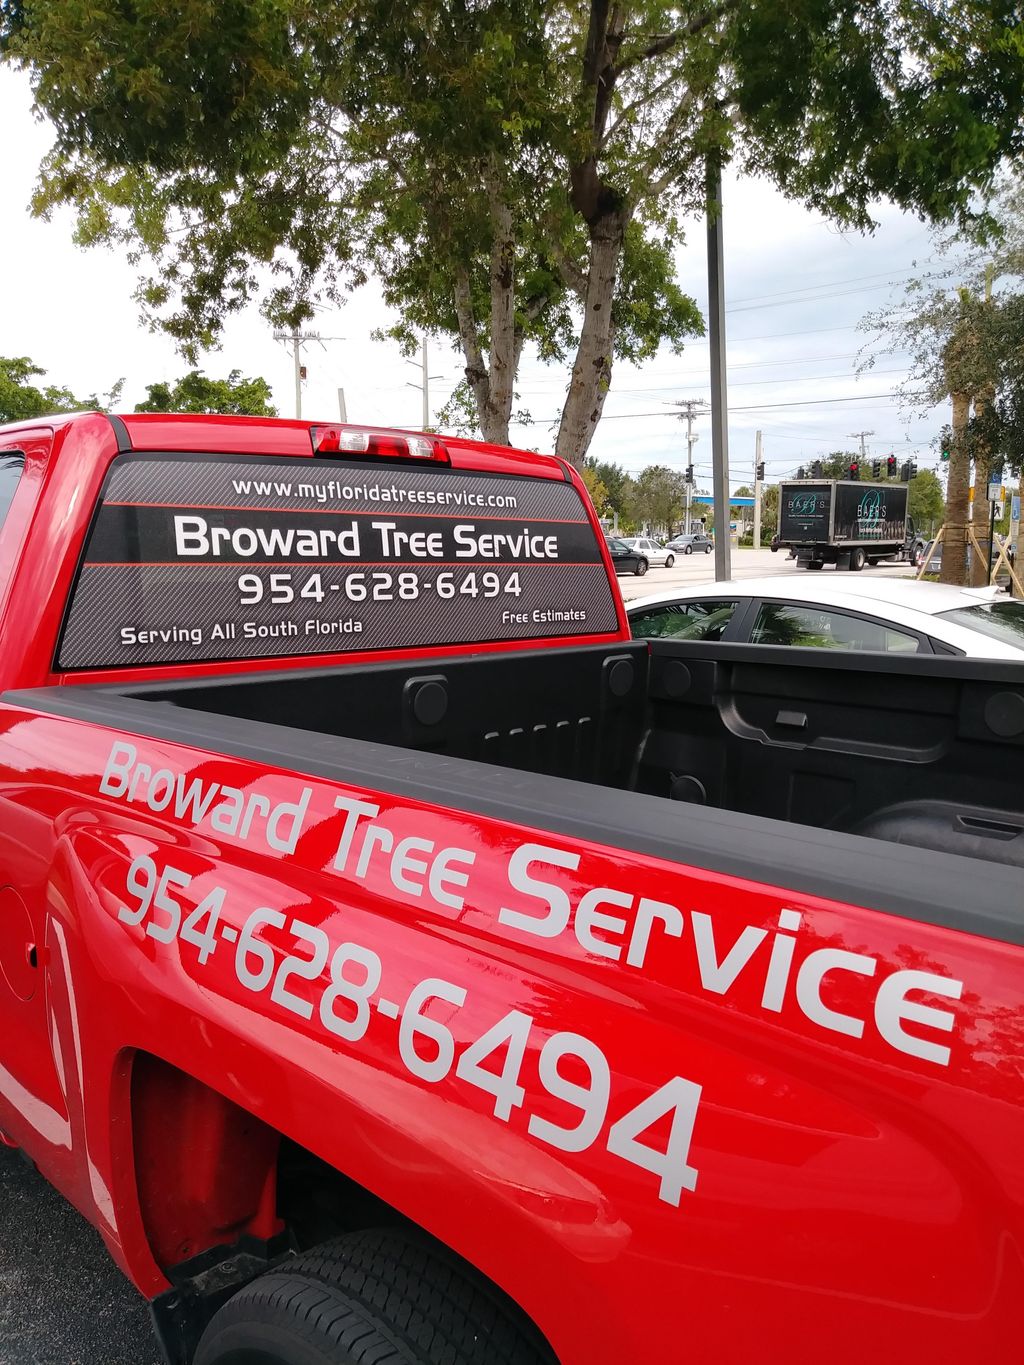 Broward Tree Service